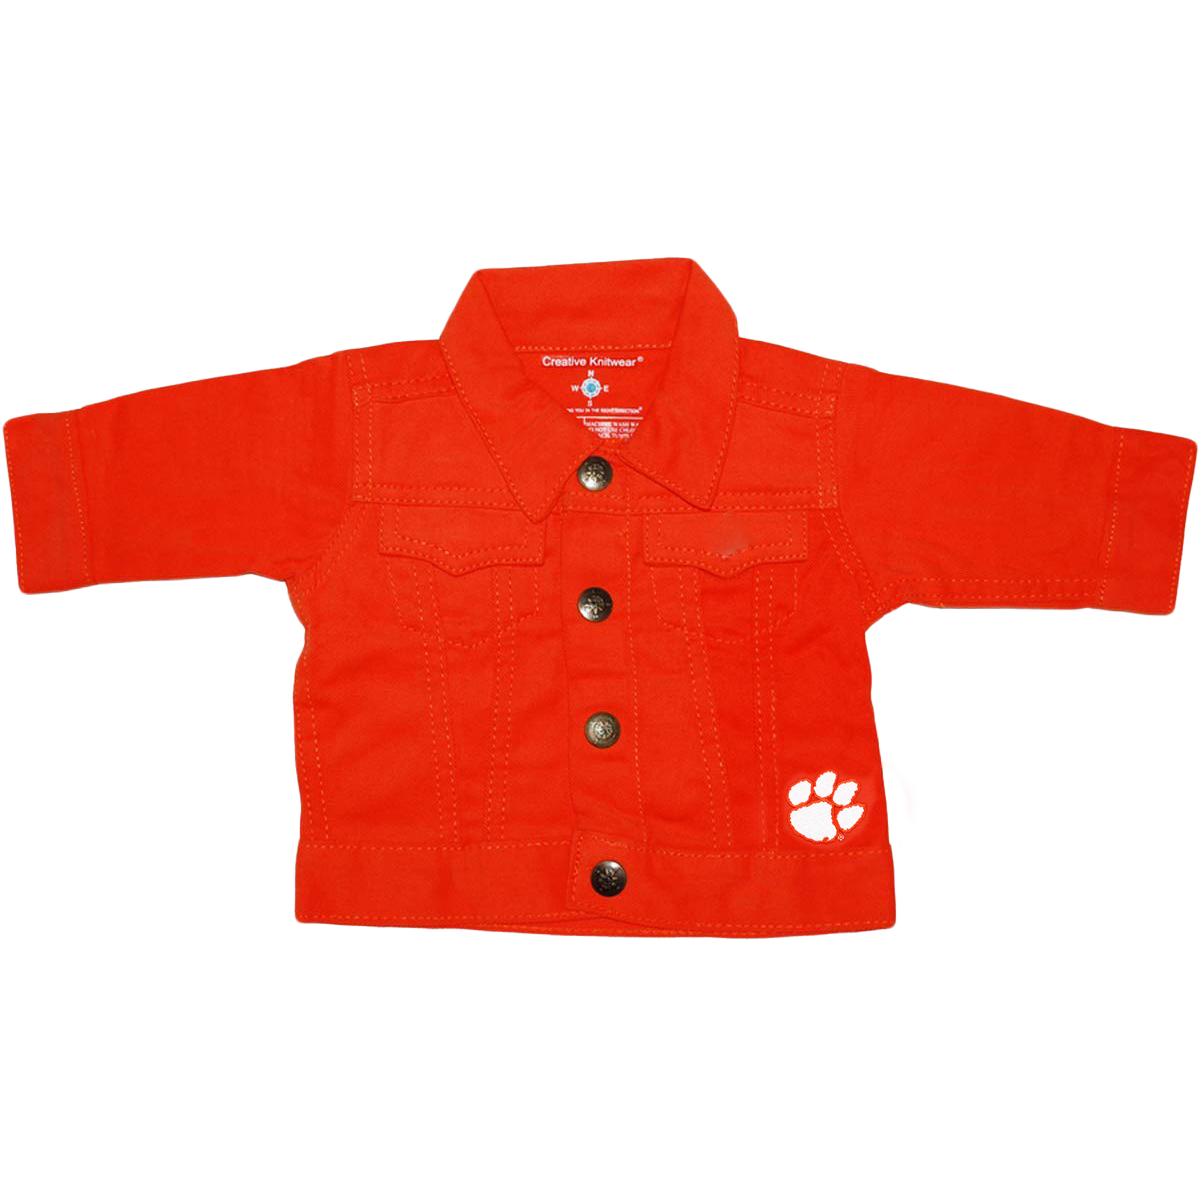 Clemson Orange Toddler Jacket with Paw